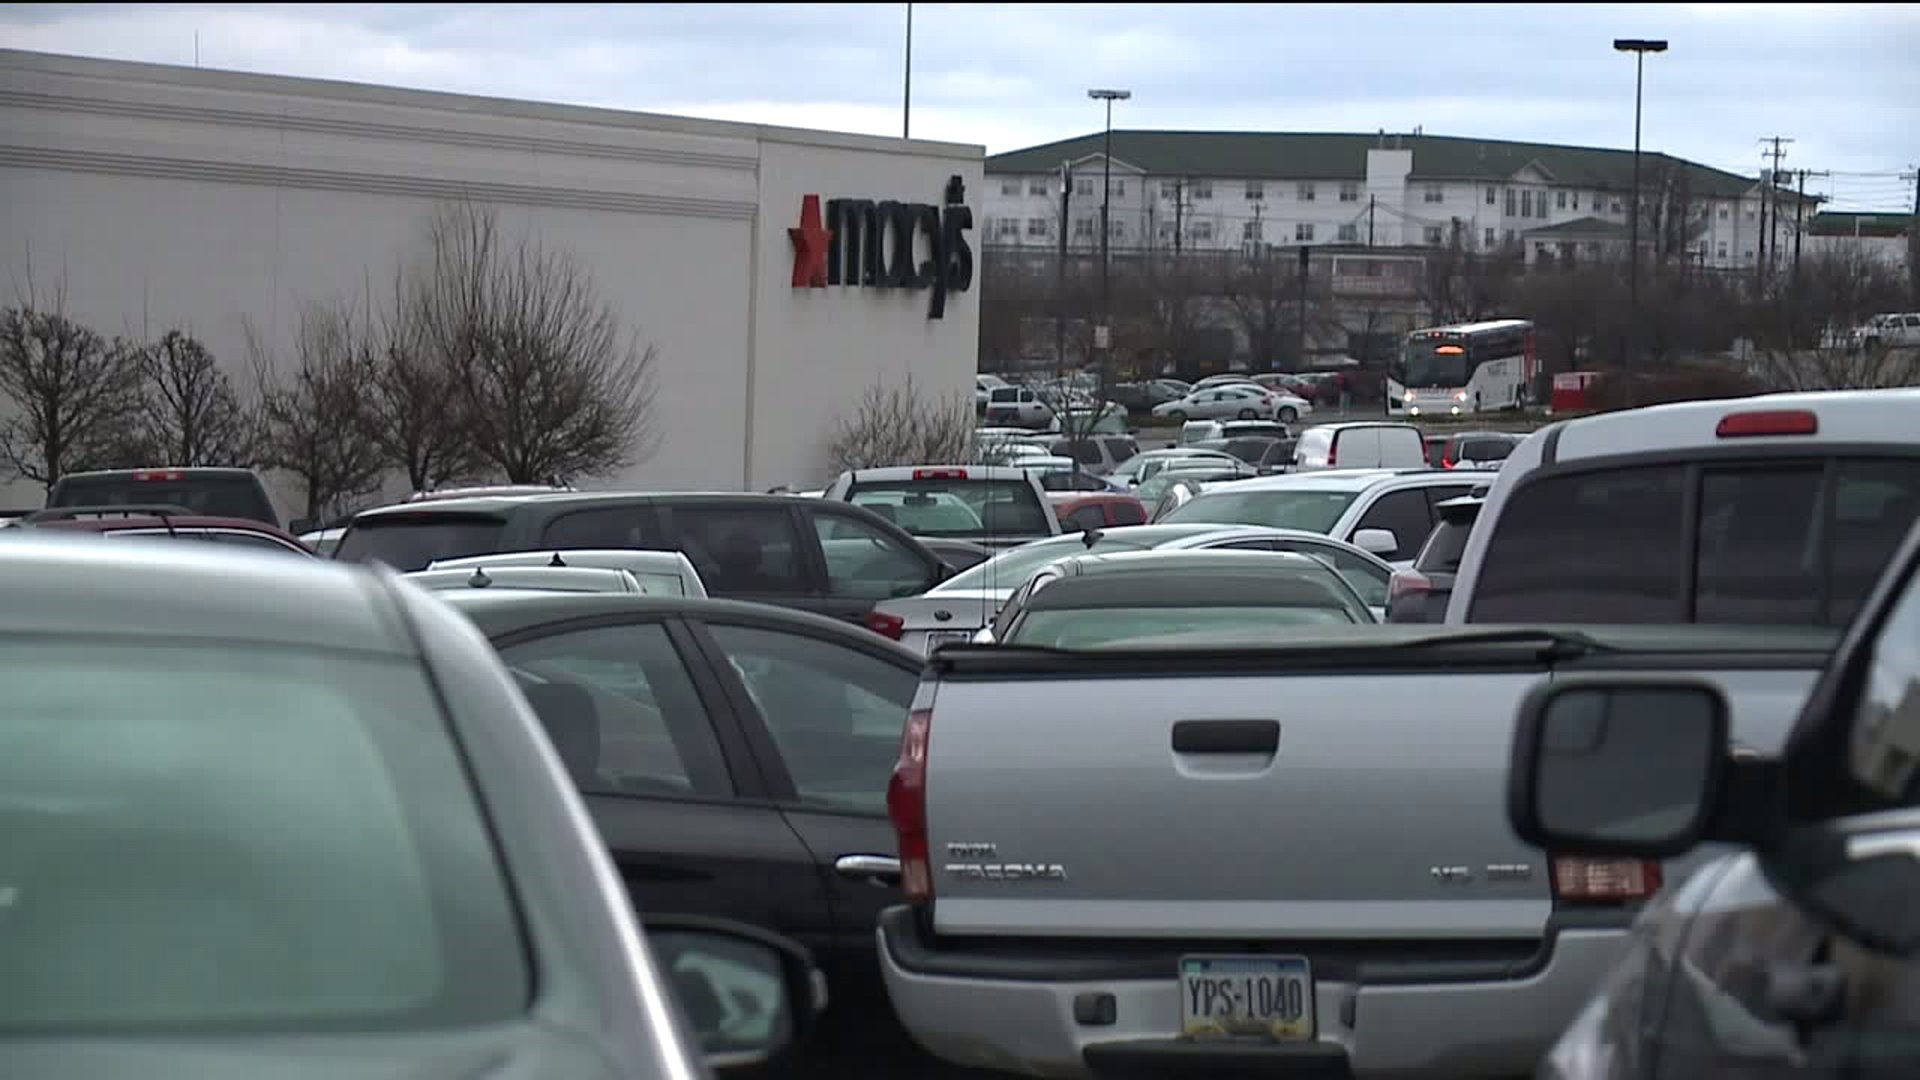 Last Minute Shoppers Fill Mall Near Wilkes-Barre